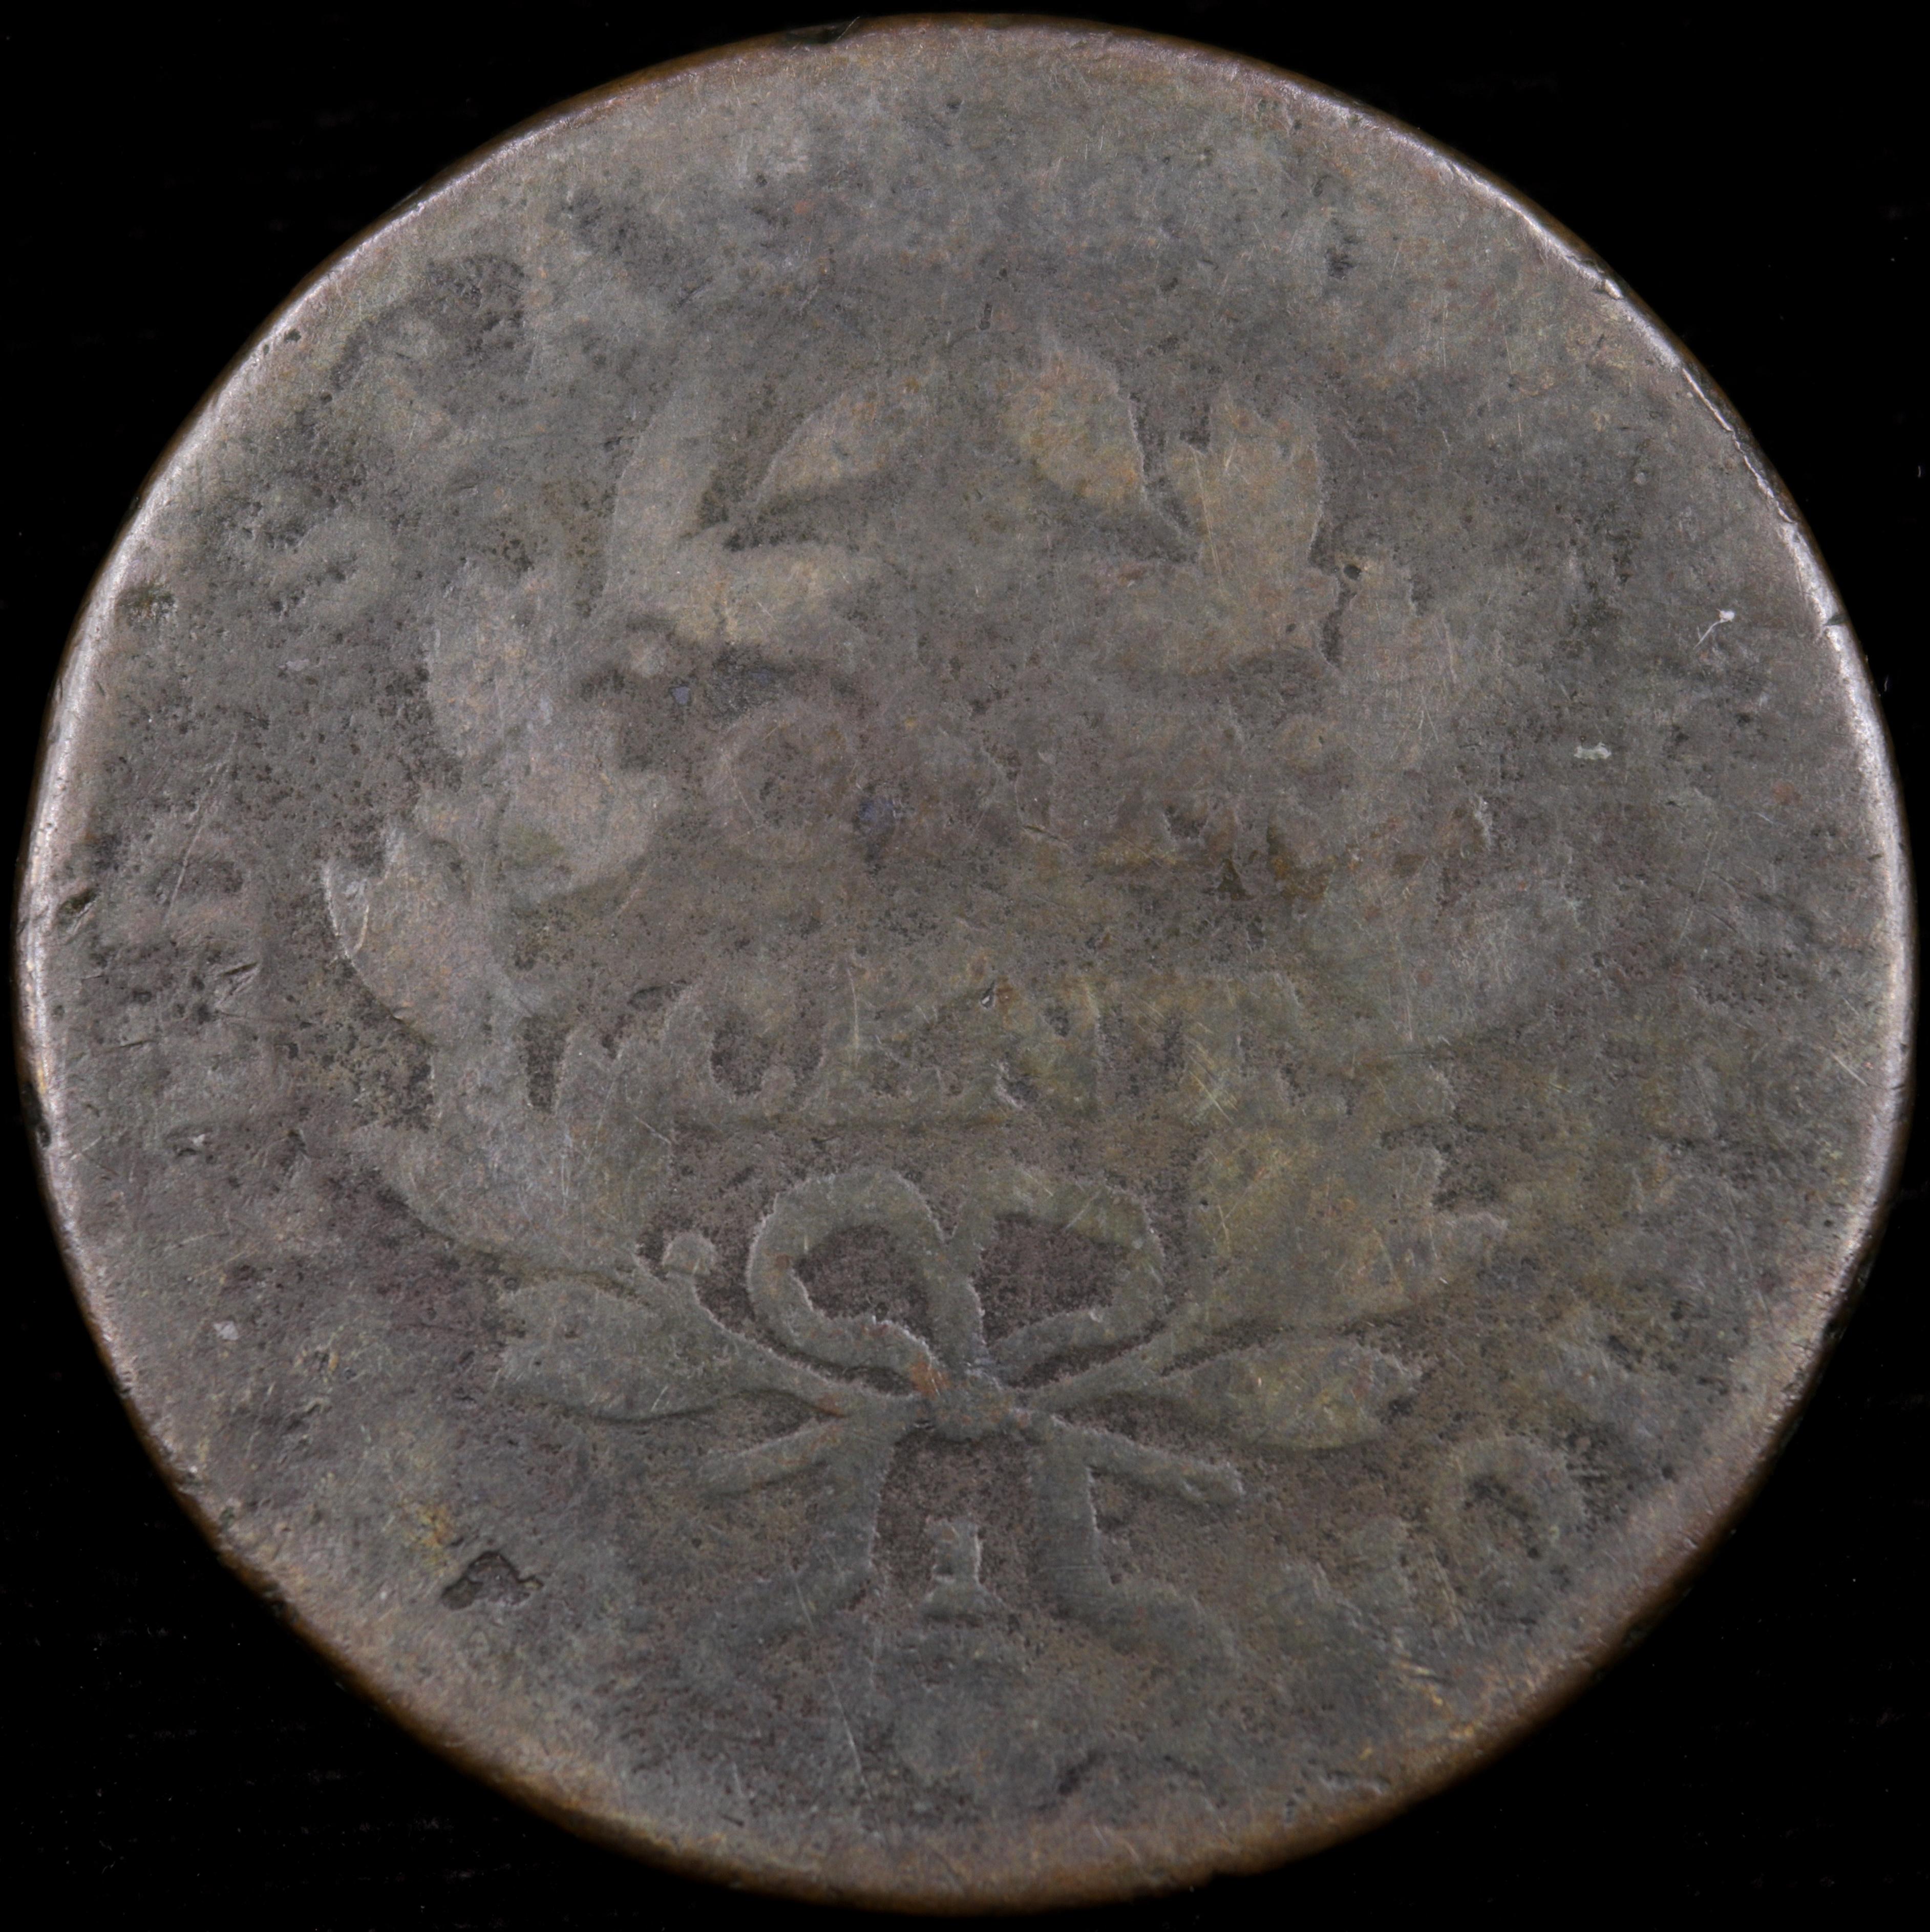 1800 U.S. draped bust large cent